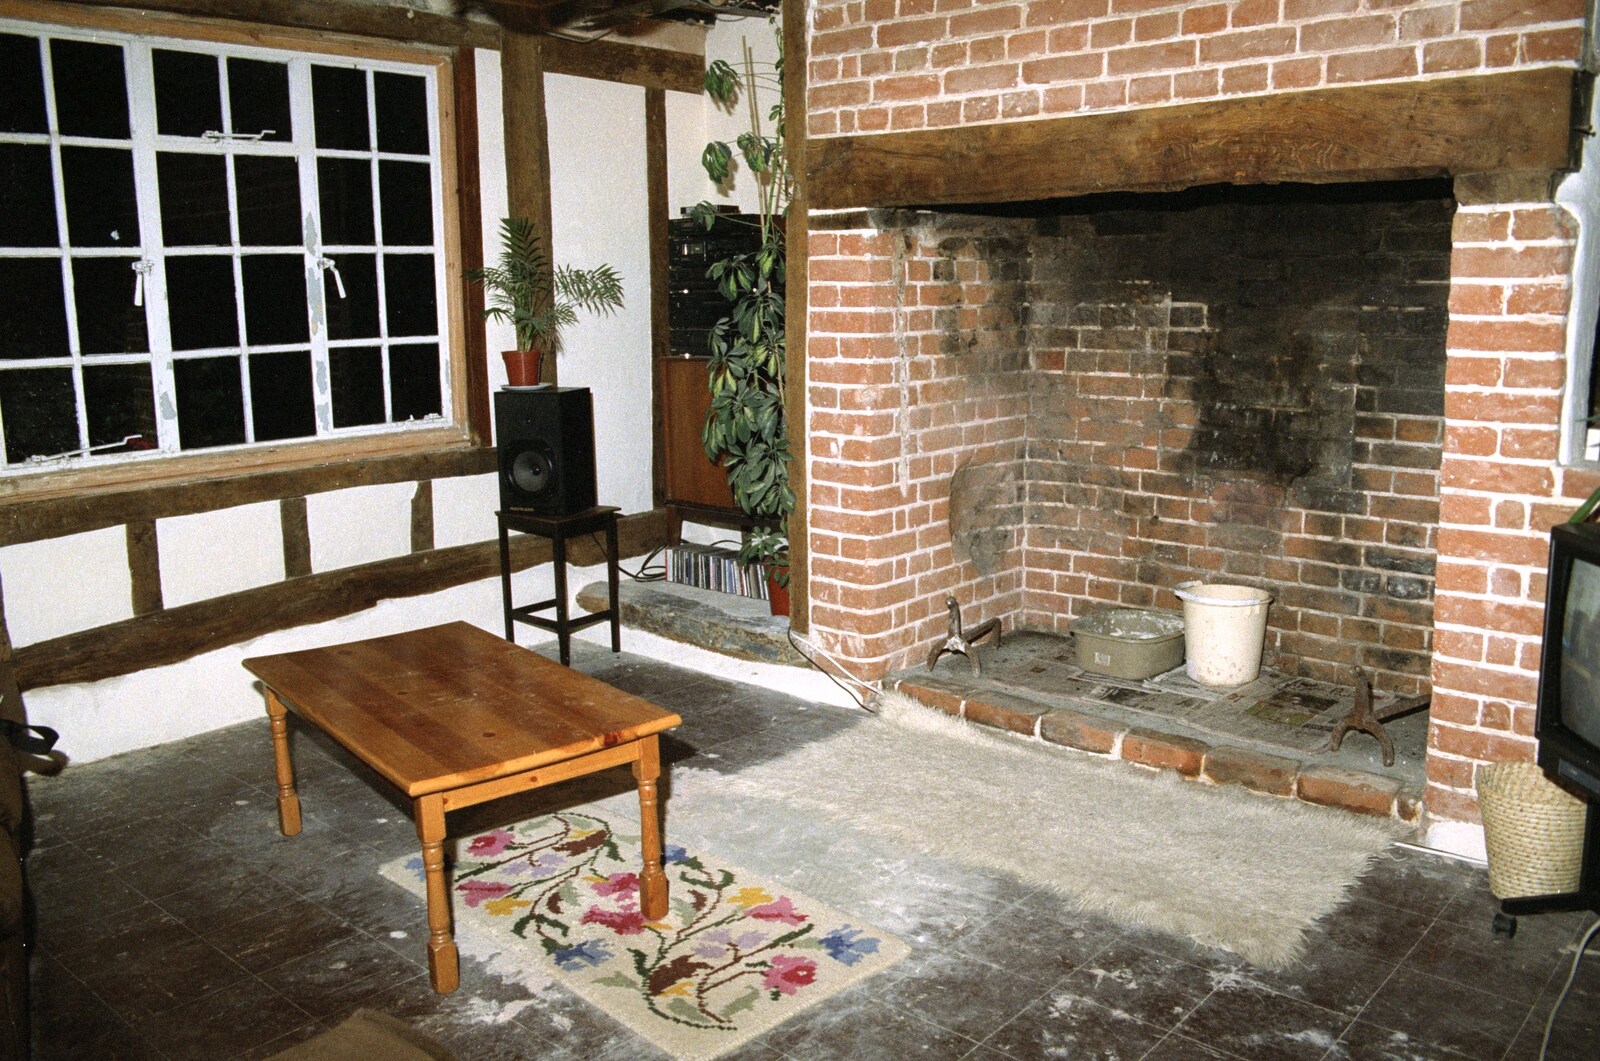 Grandmother's Seventieth Birthday, Brockenhurst and Keyhaven, Hampshire - 11th September 1994: The inglenook fireplace